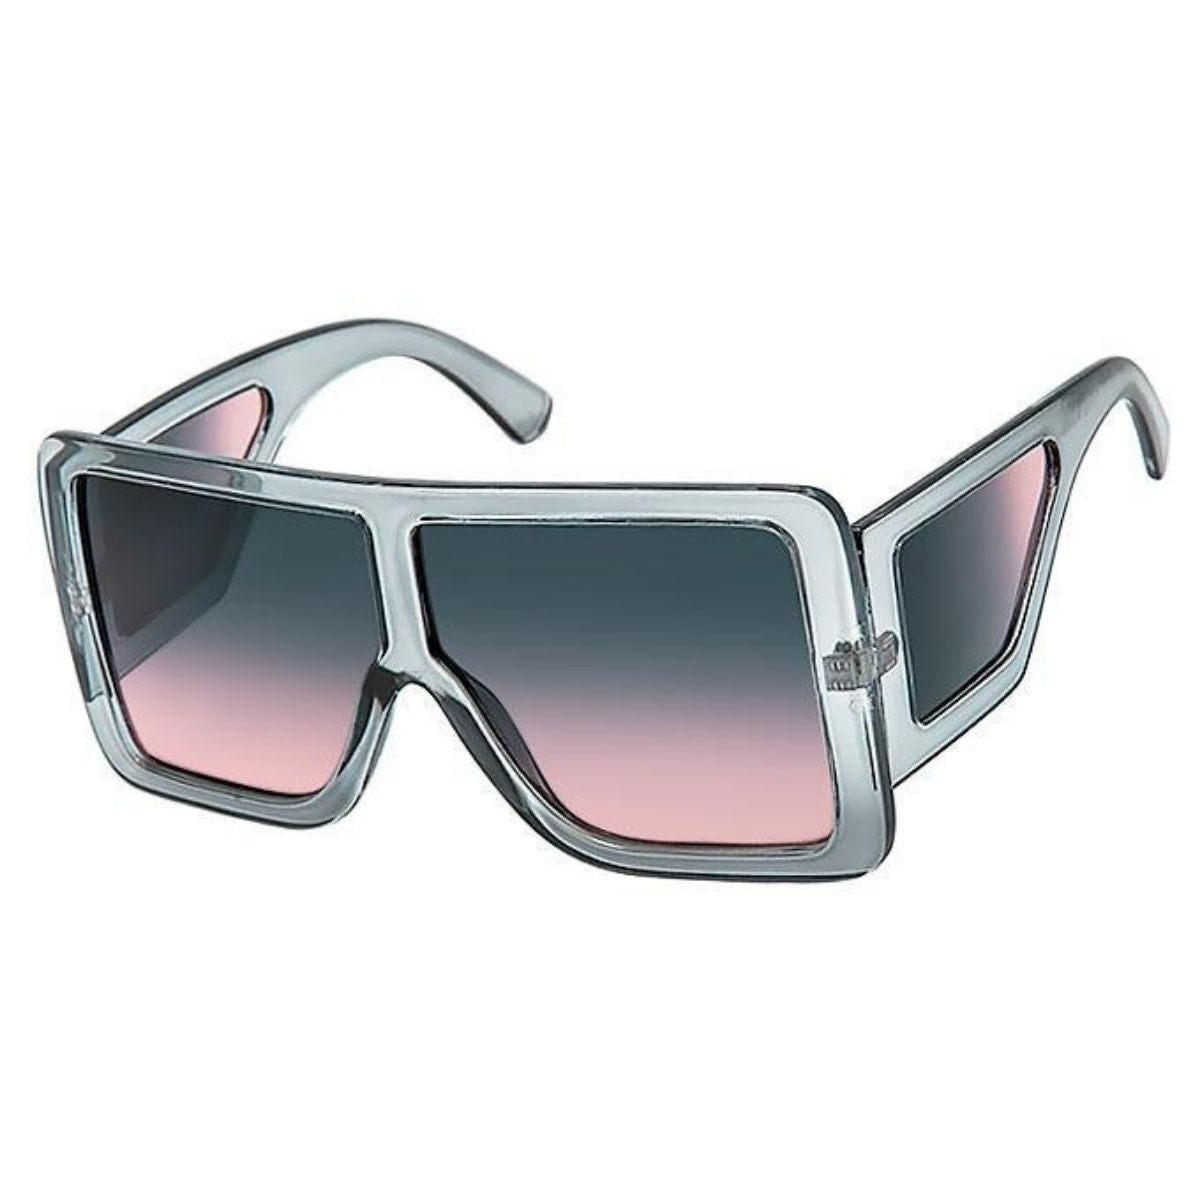 Square Gray Colored Frame Sunglasses